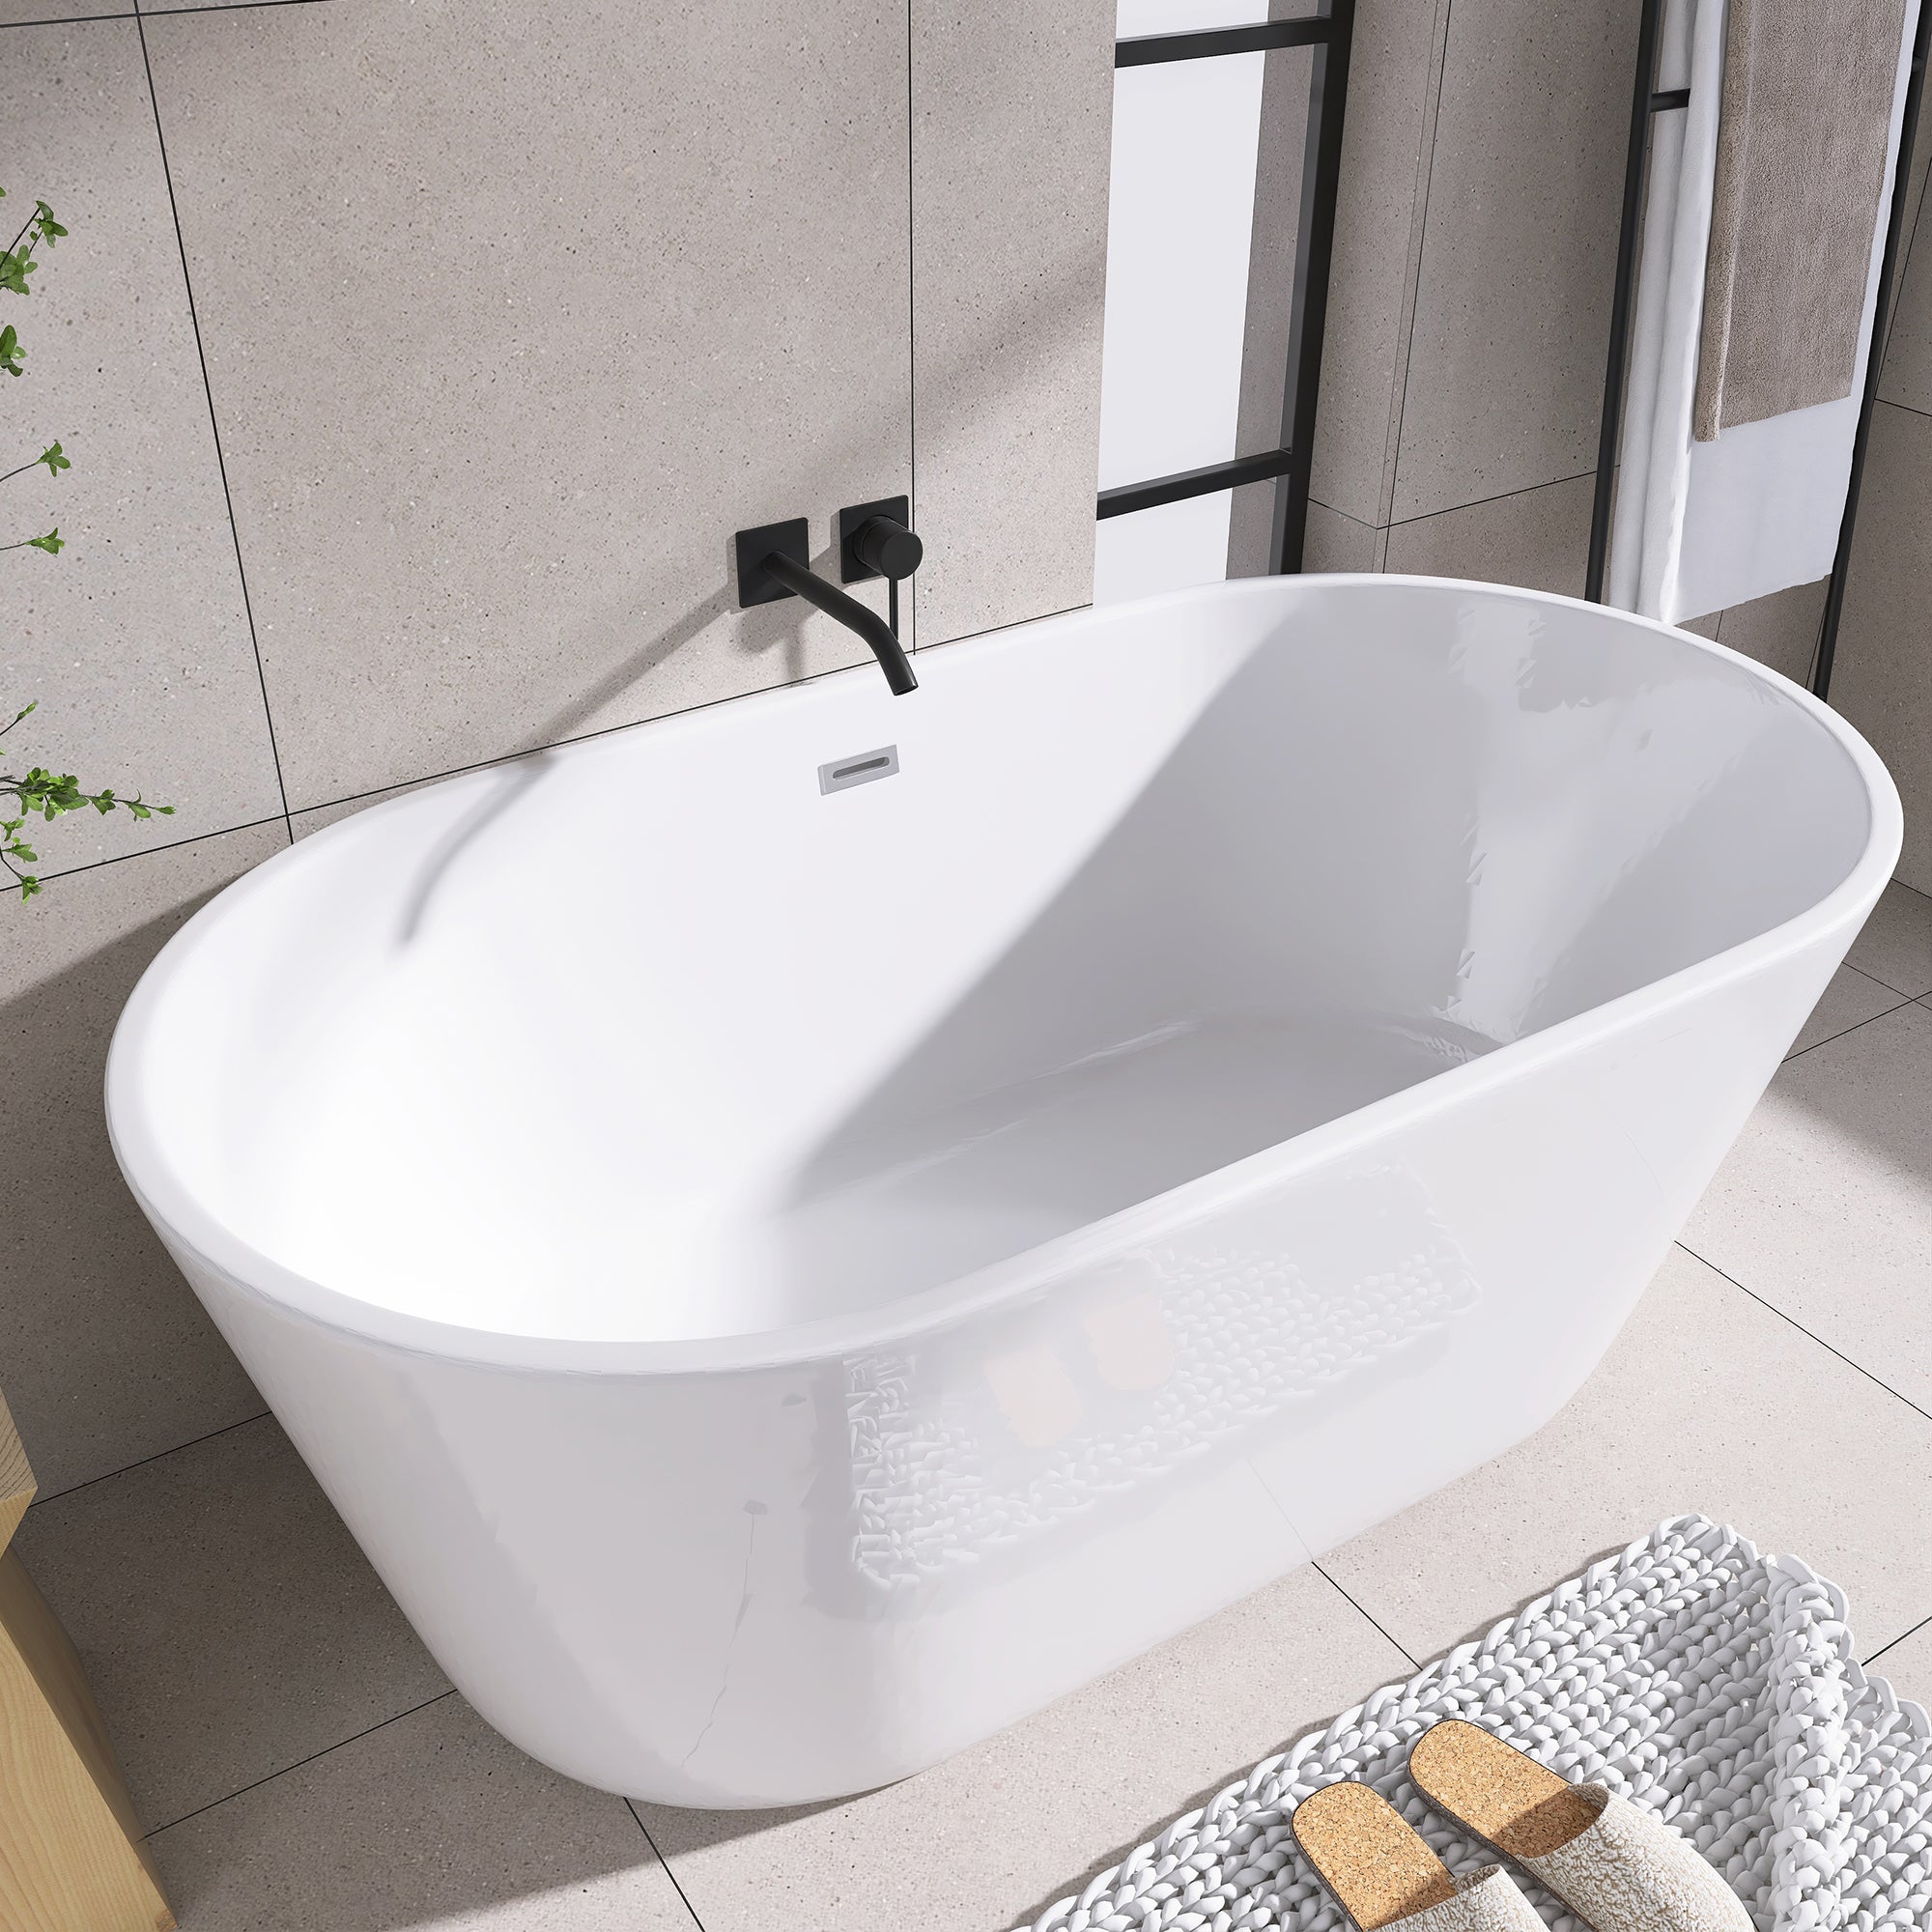 Staykiwi Acrylic Freestanding Soaking Bathtub in Glossy White with Chrome Drain